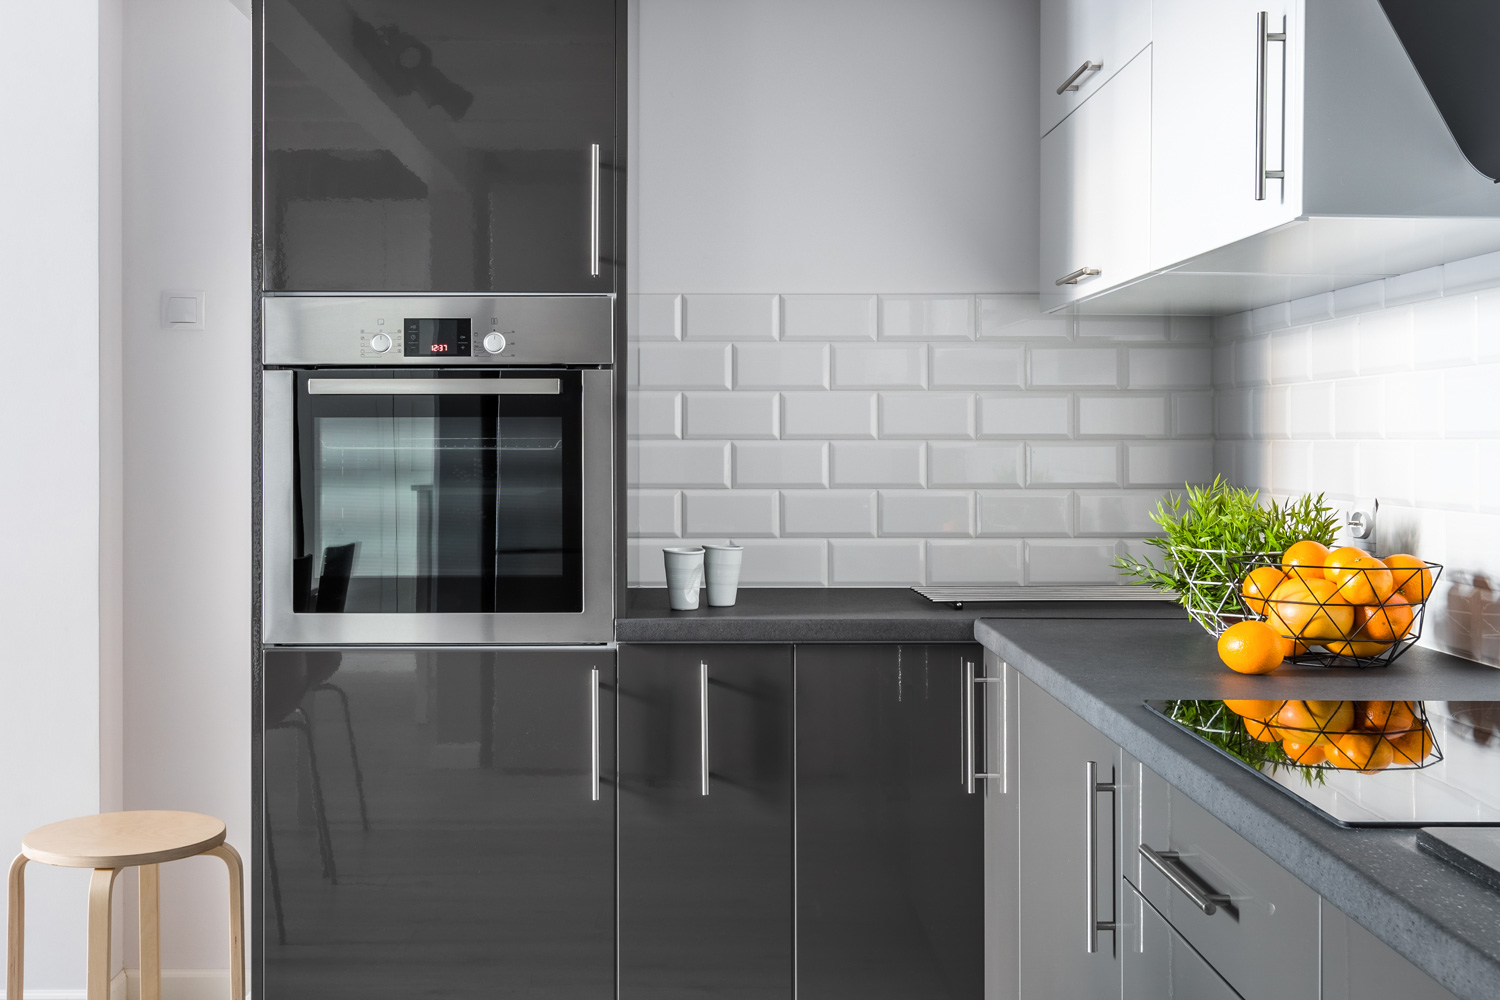 Elegant kitchen interior with brick tiles and modern cupboards